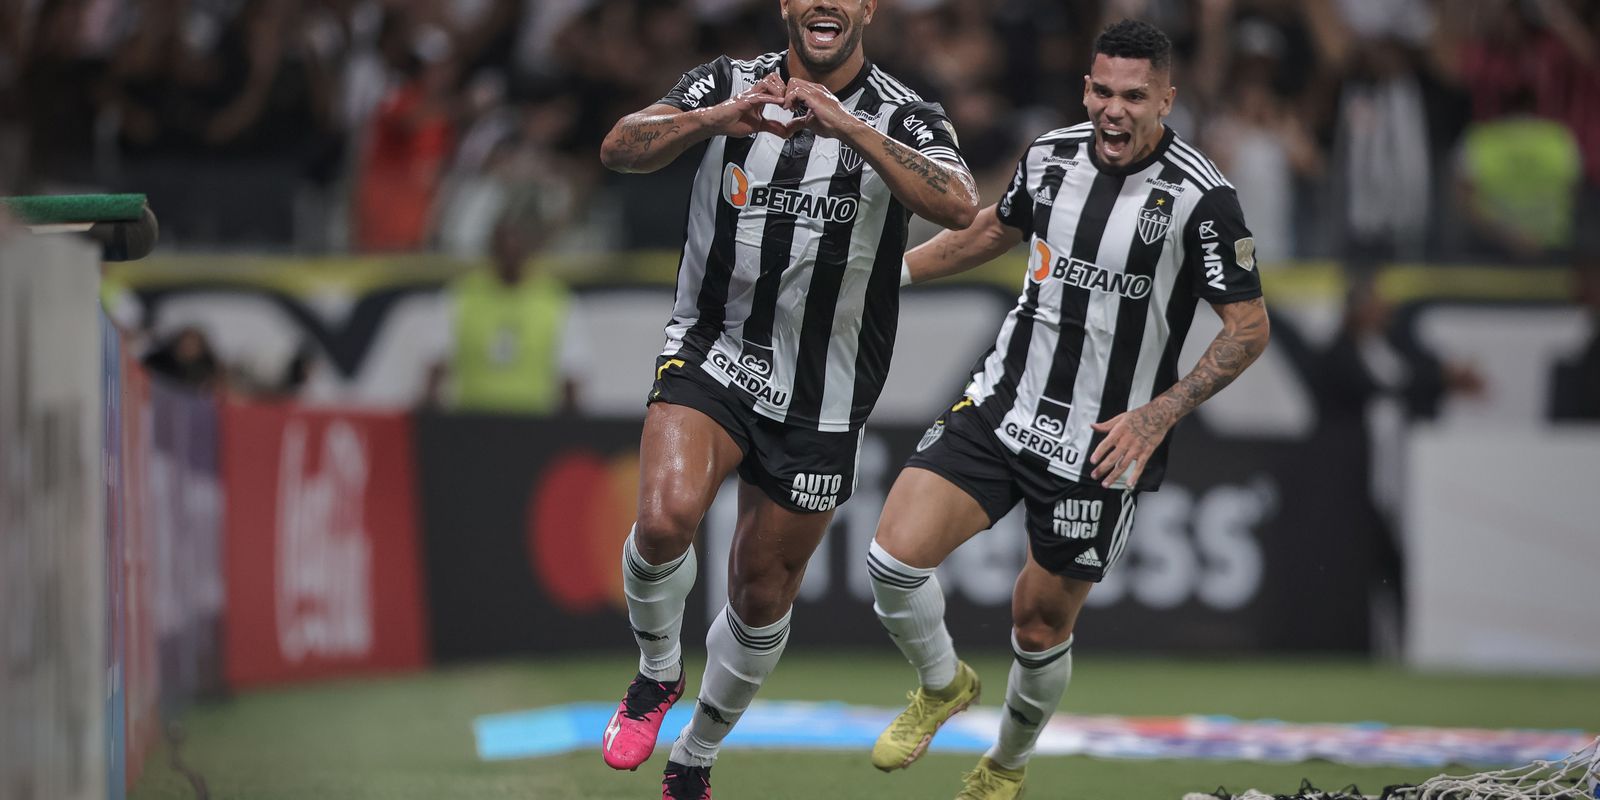 Atlético-MG advances to the third preliminary phase of the Copa Libertadores